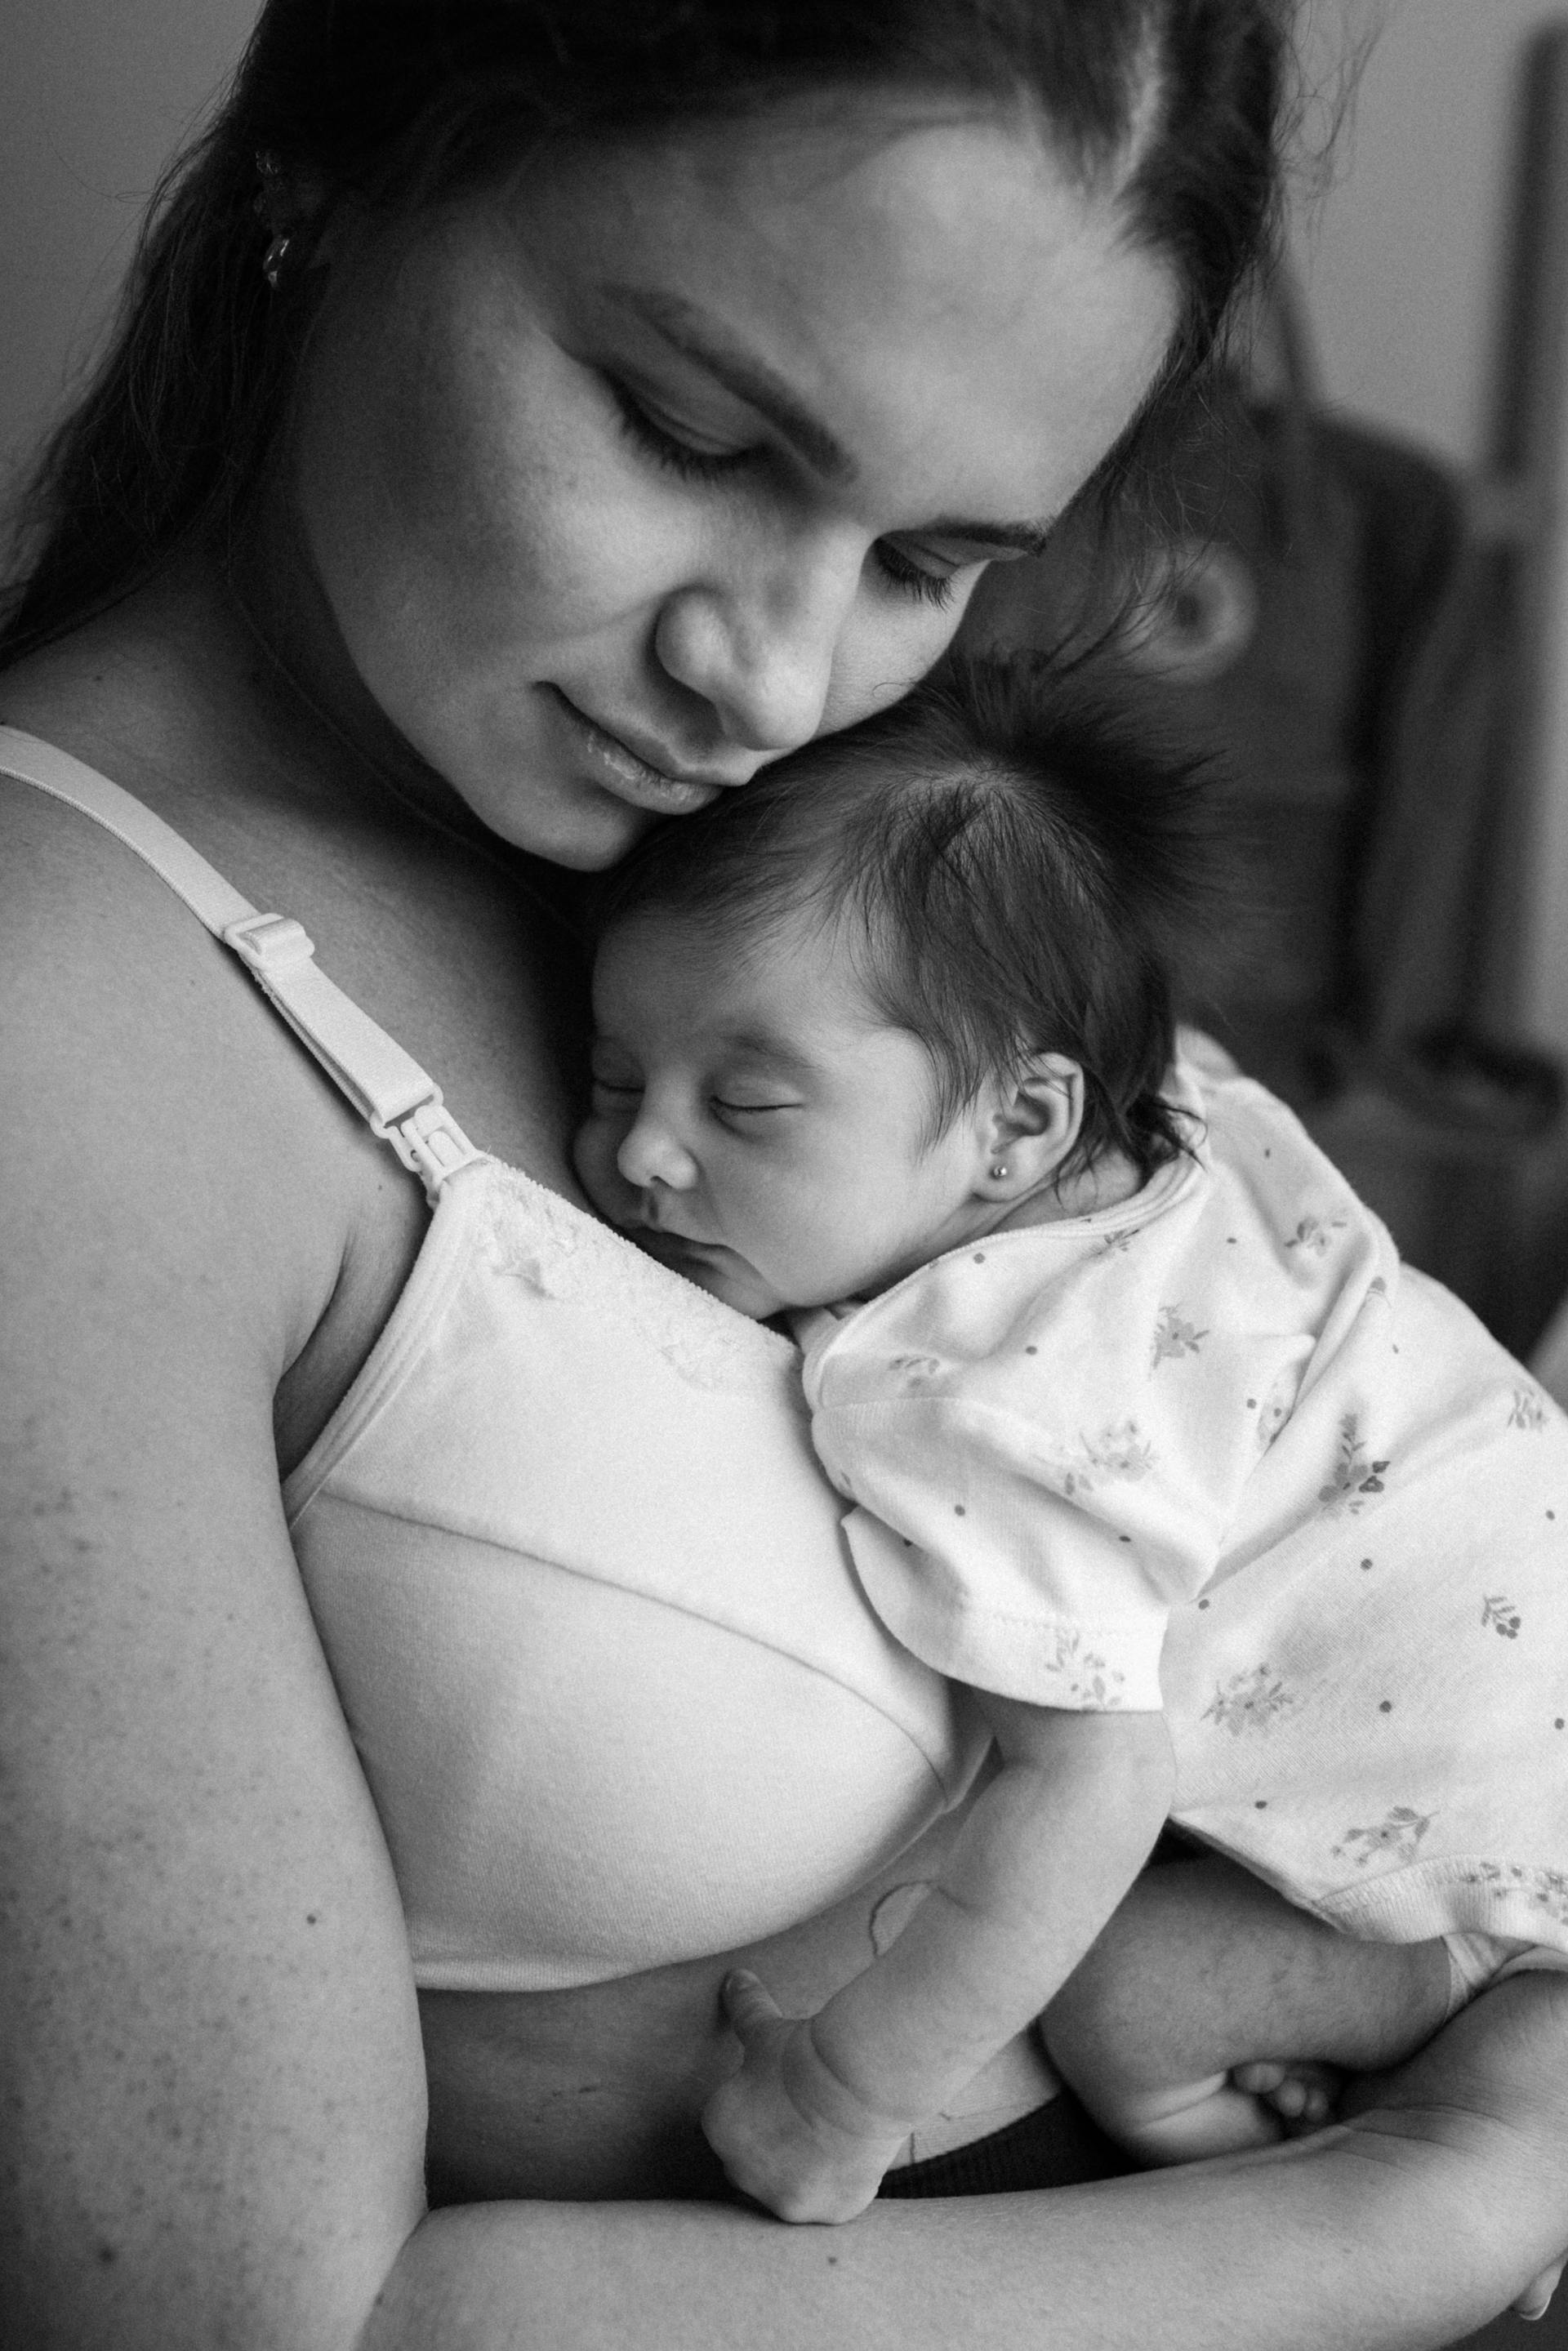 A mother hugging her sleeping baby | Source: Pexels